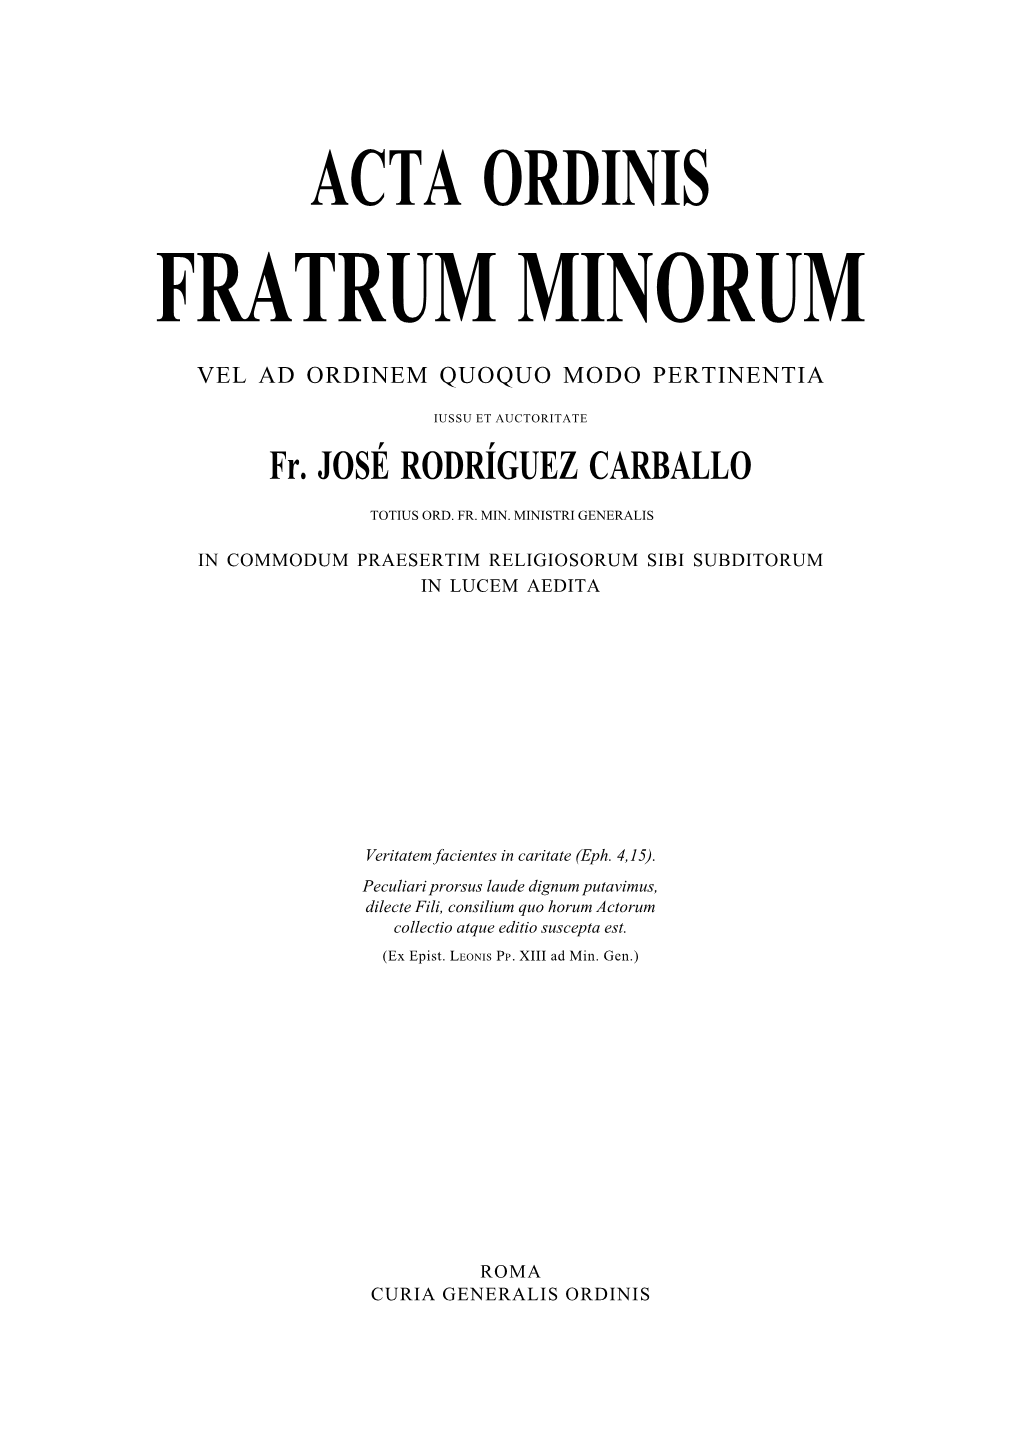 Fratrumminorum